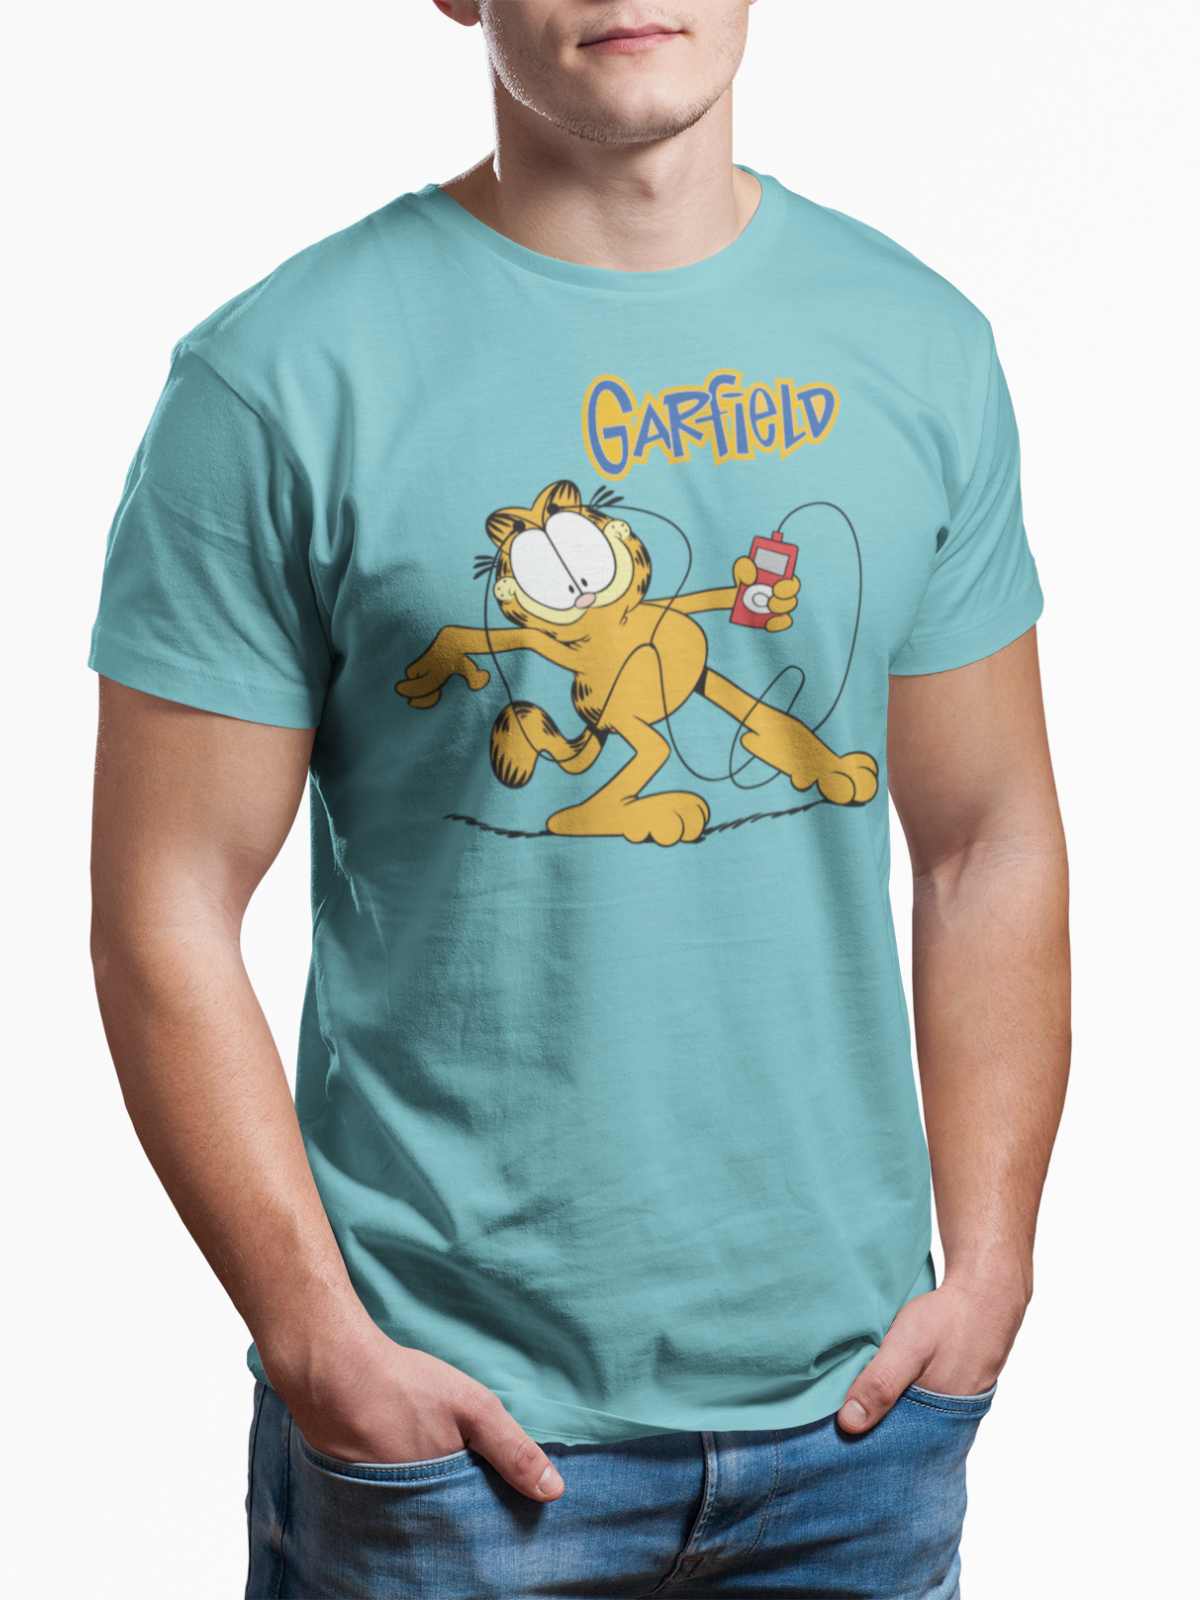 Musical: Garfield